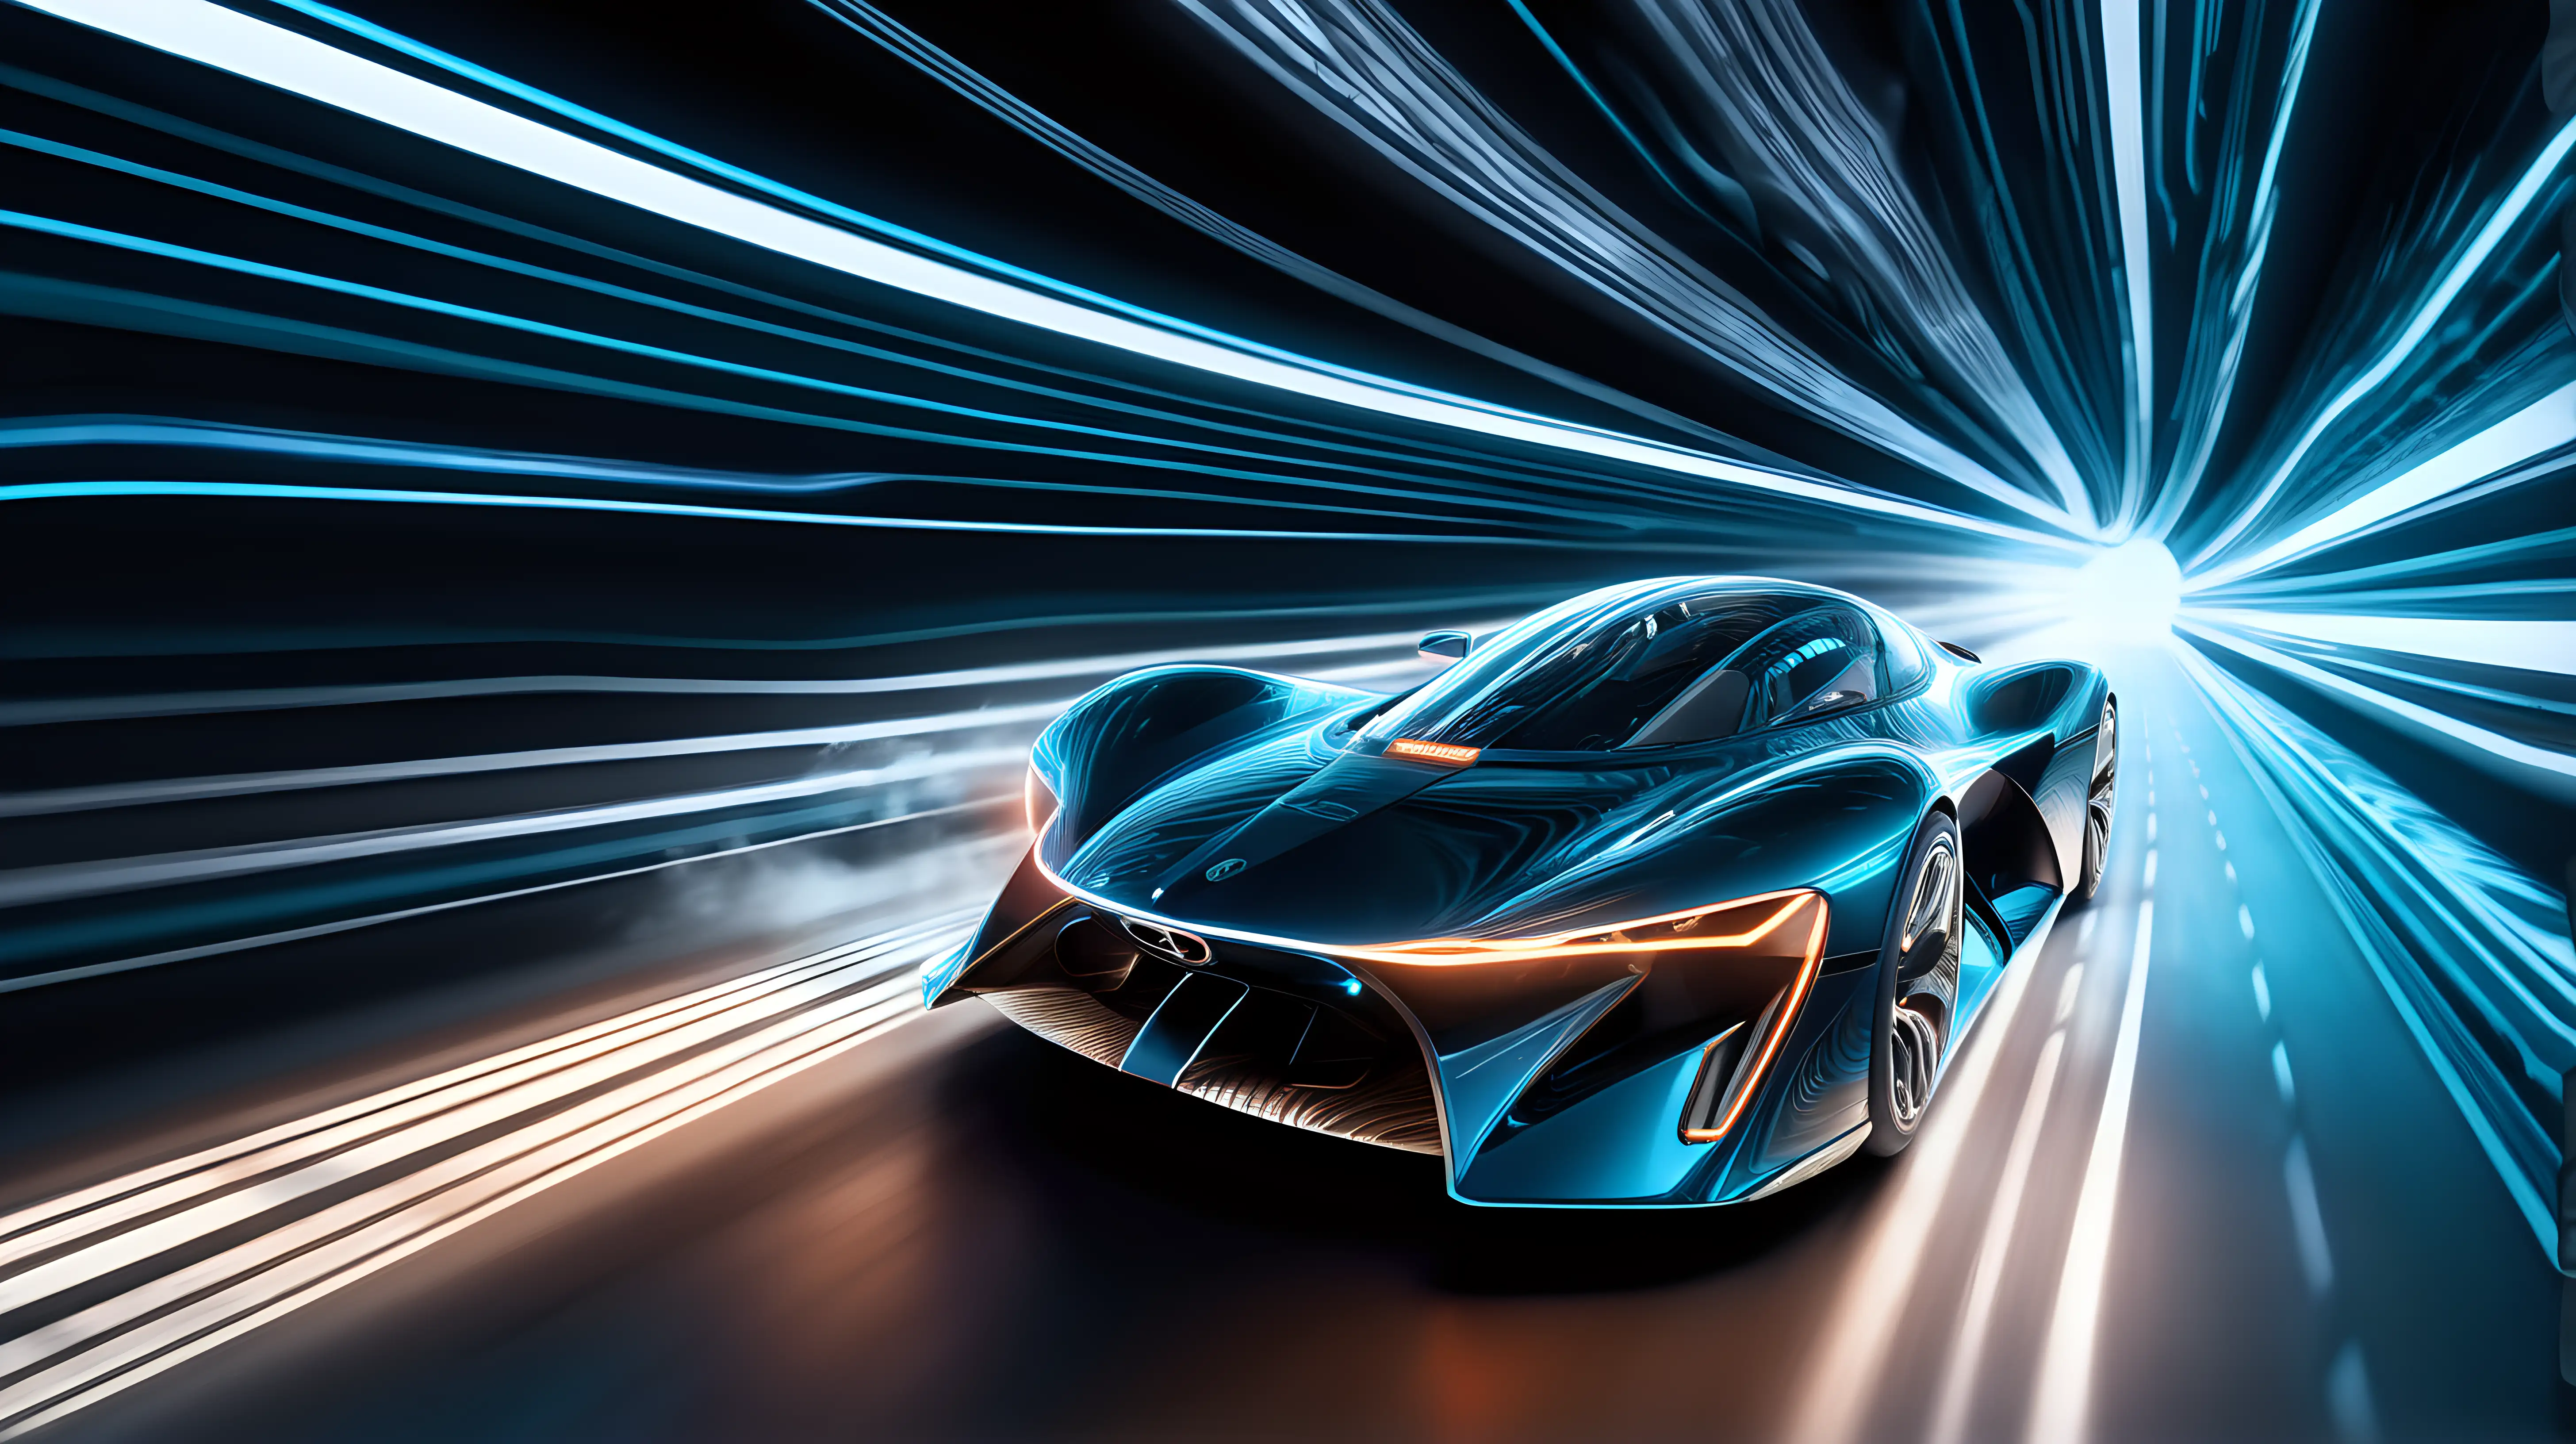 Futuristic HighSpeed Car Racing Through Vibrant Light Tunnel